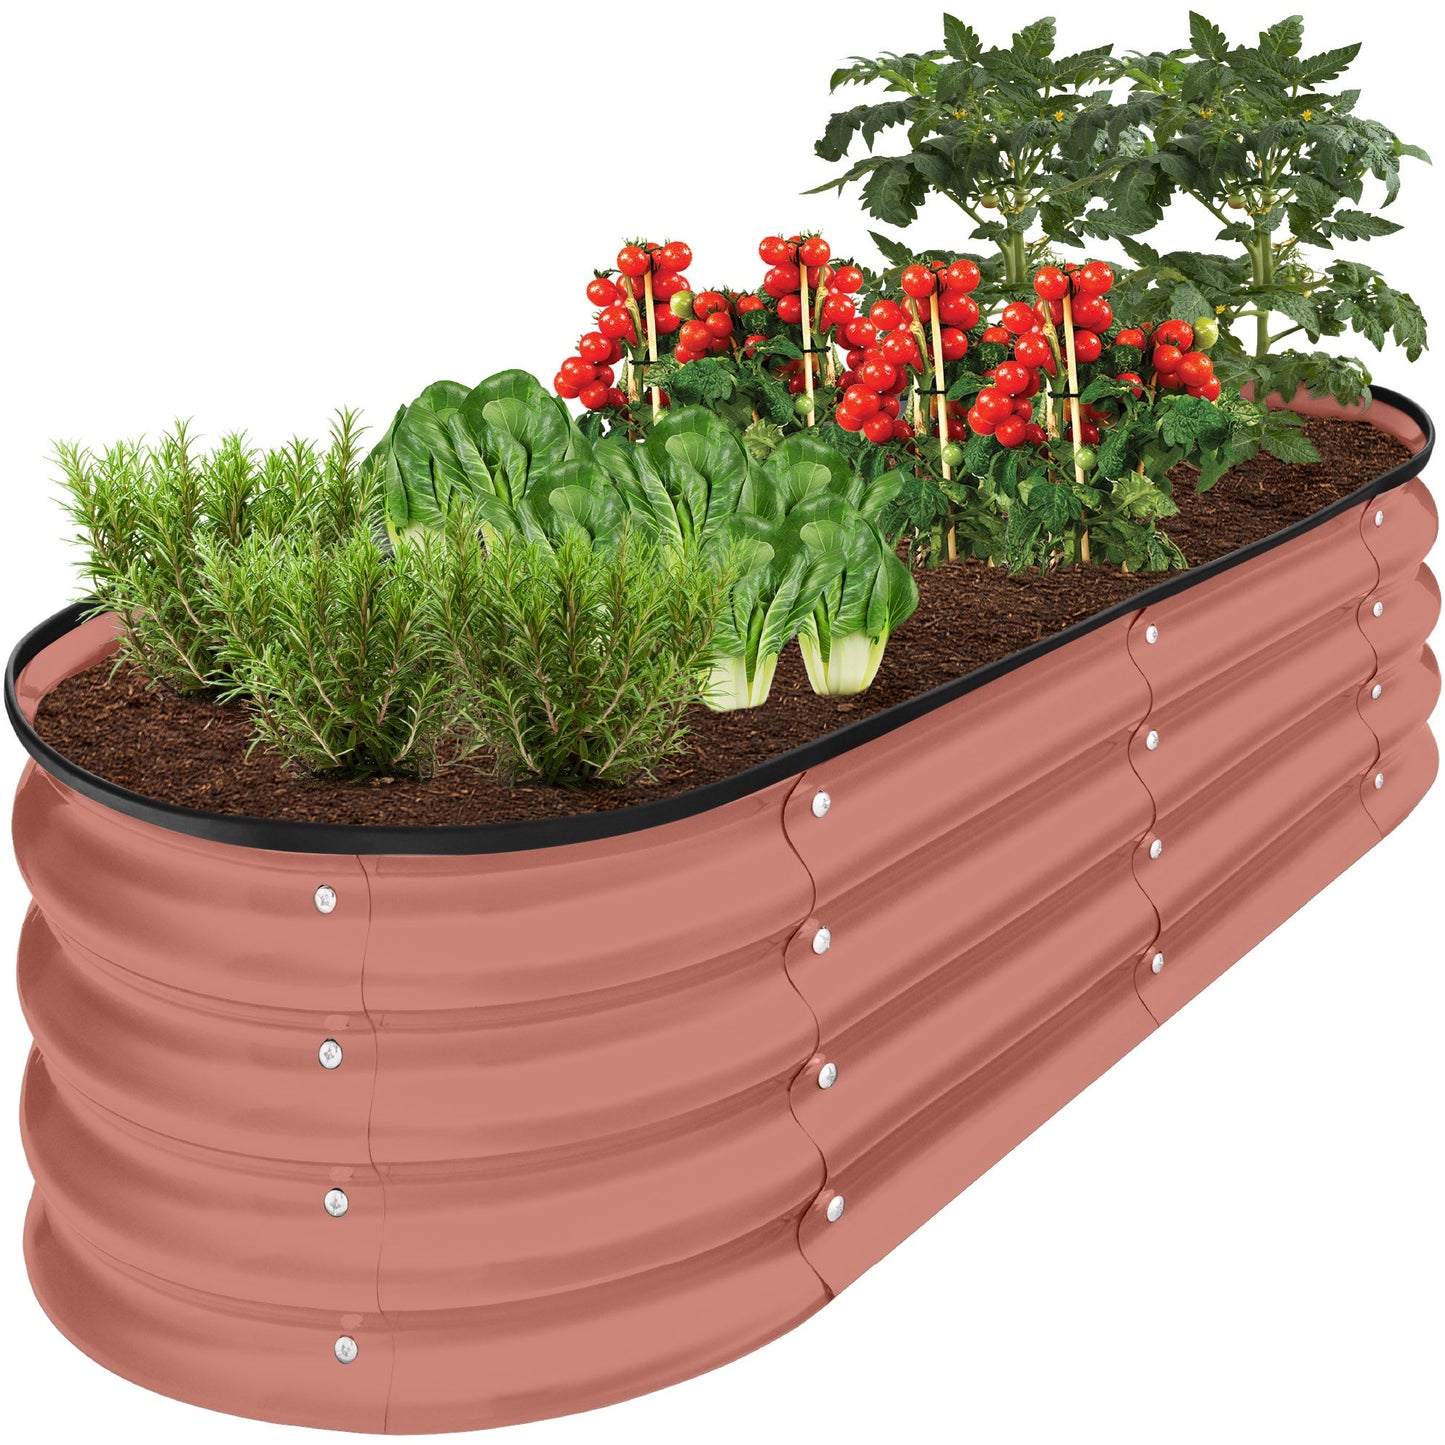 Outdoor Raised Metal Oval Garden Bed, Planter Box - 4x2x1ft